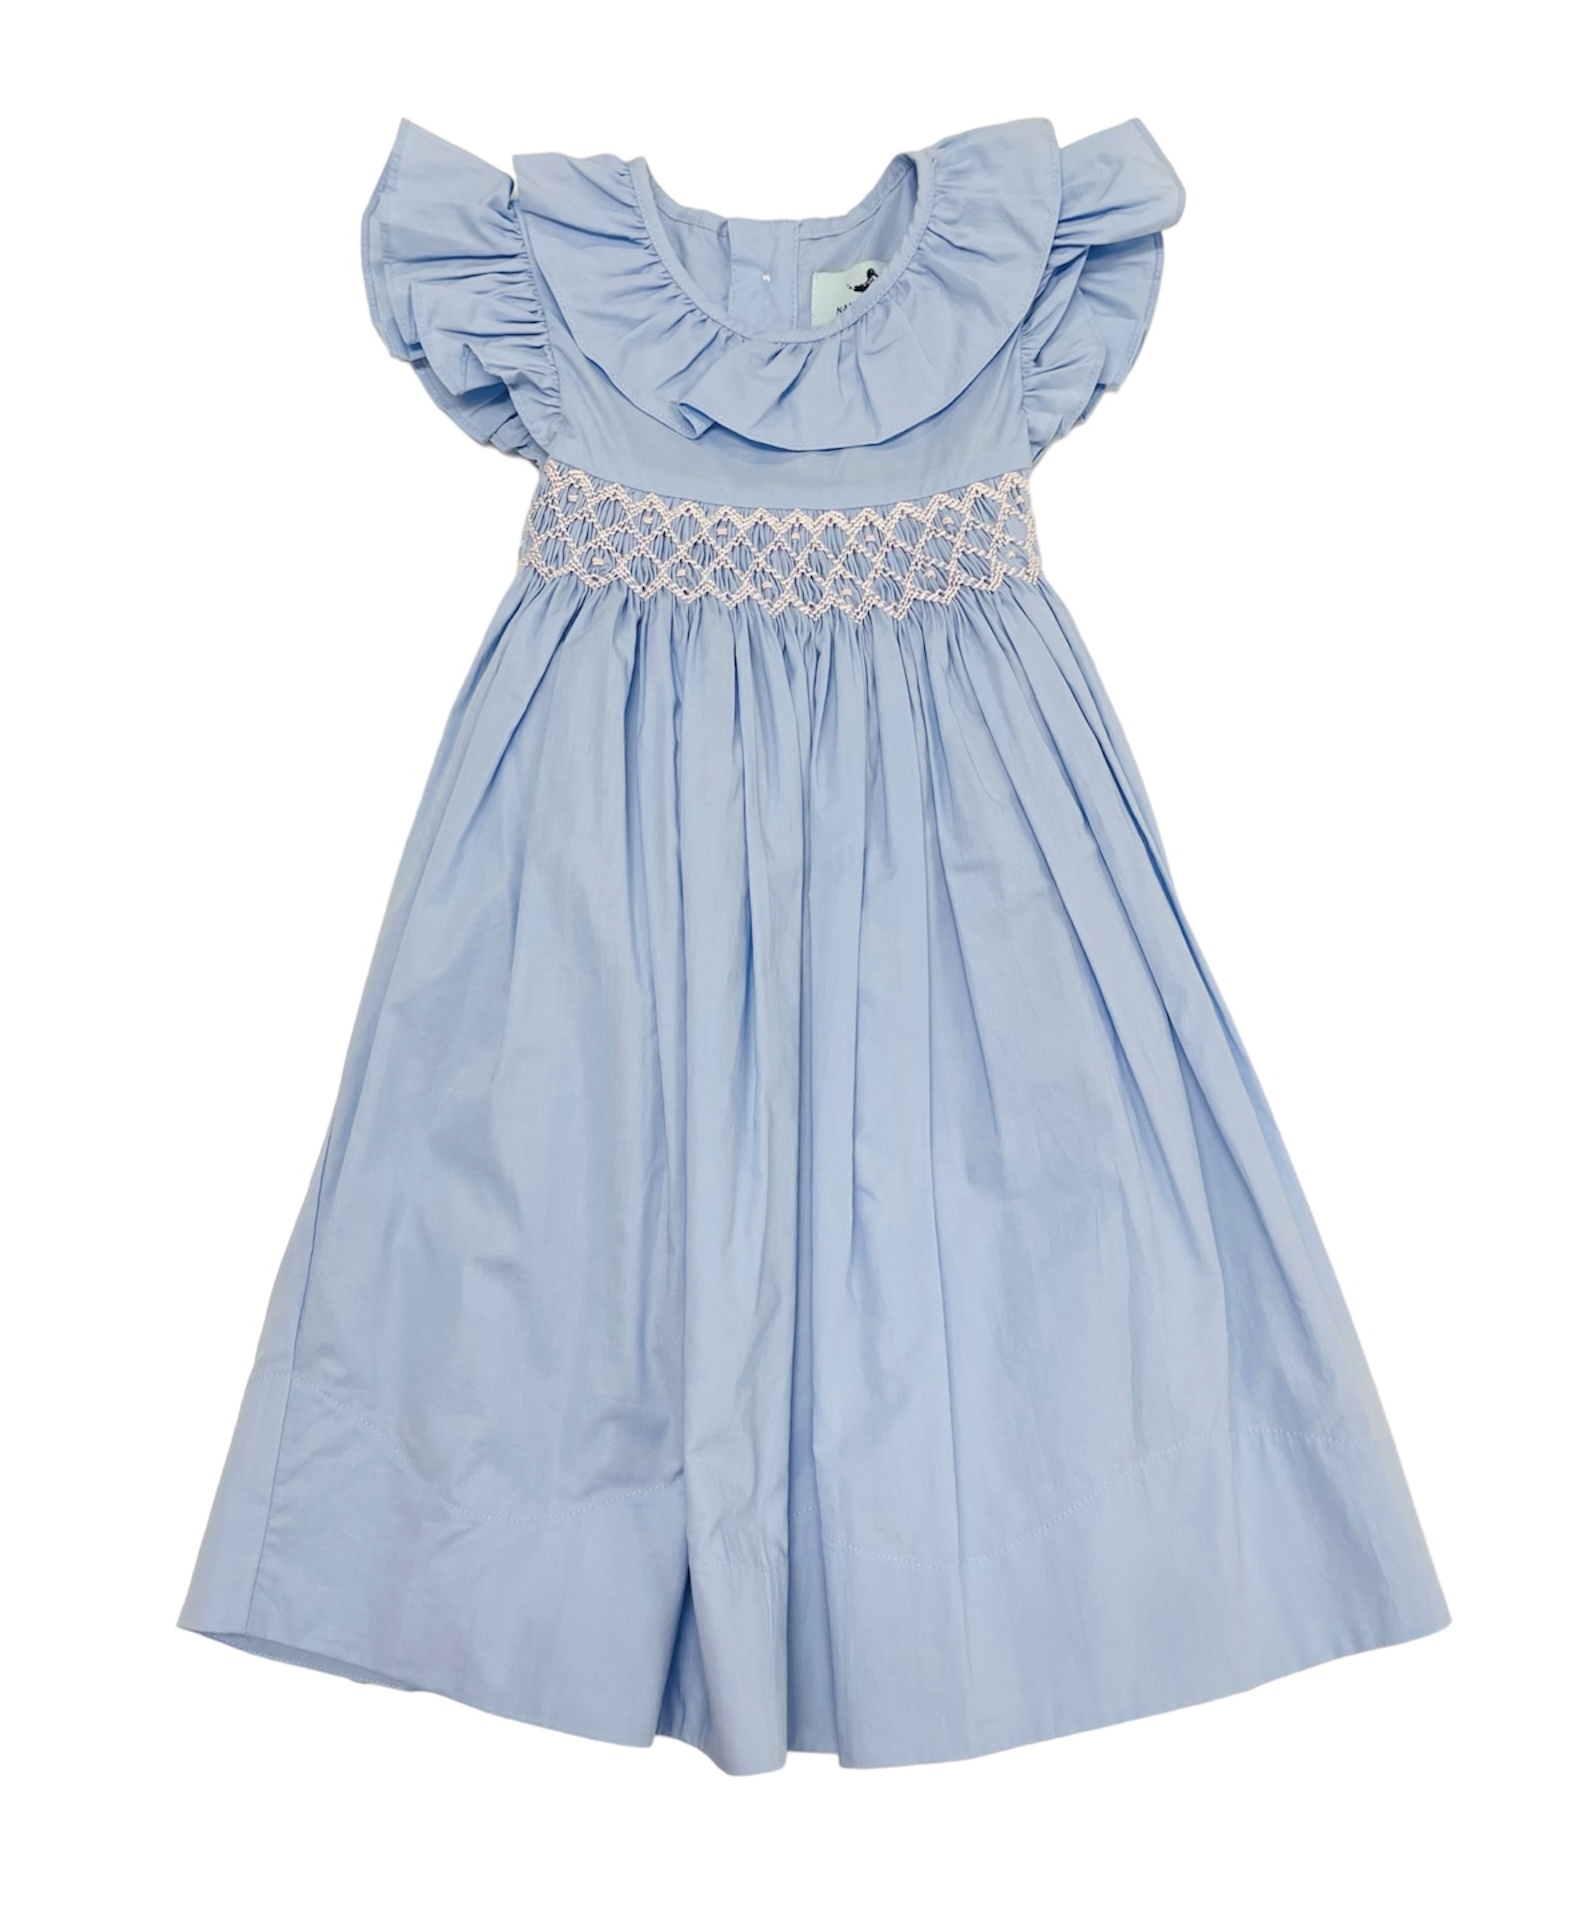 Nanducket Blue/Pink Sarah Sloane Dress